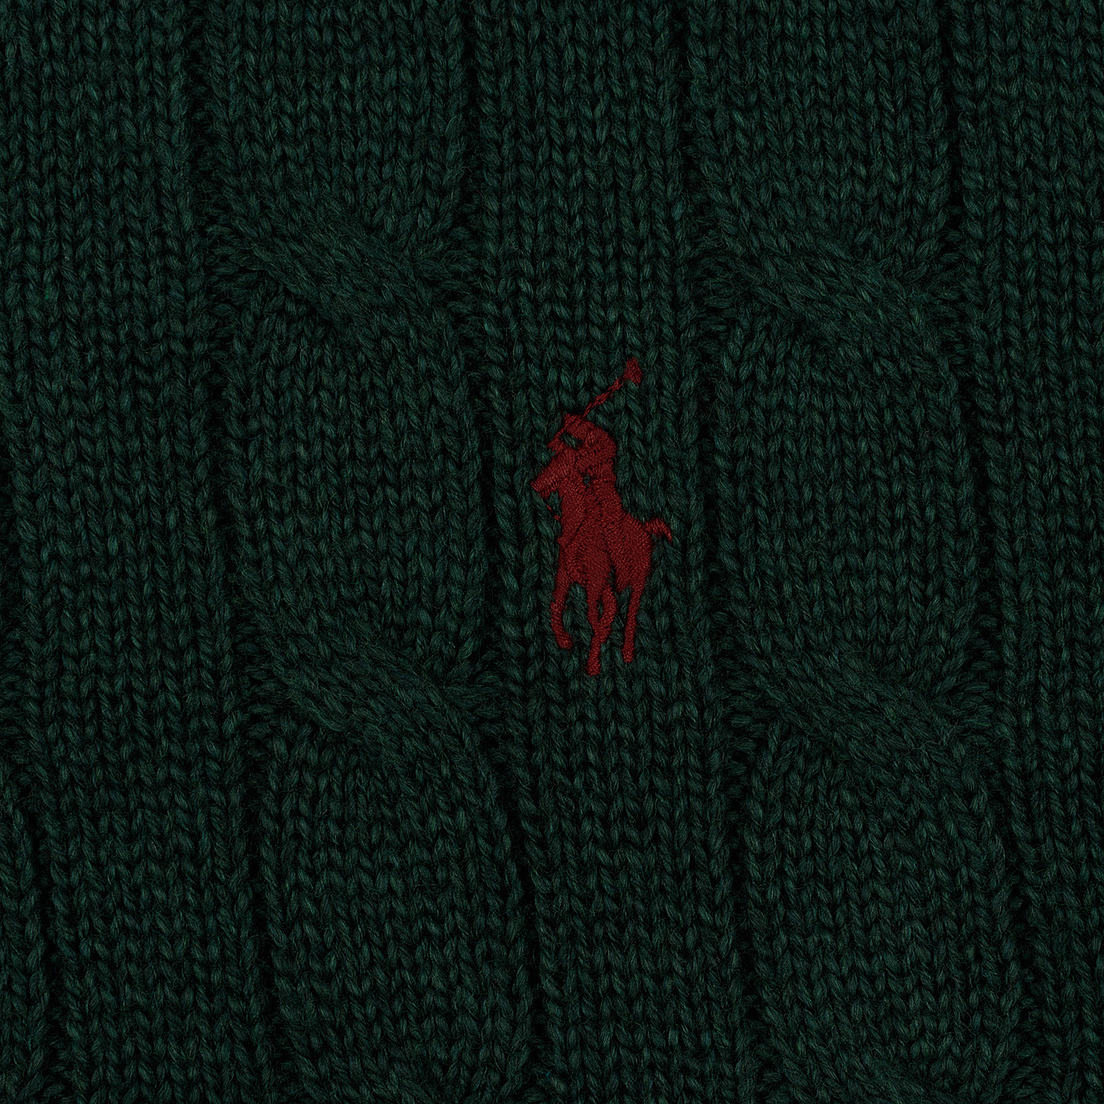 Polo Ralph Lauren Мужской свитер Crew Neck Cable Knit